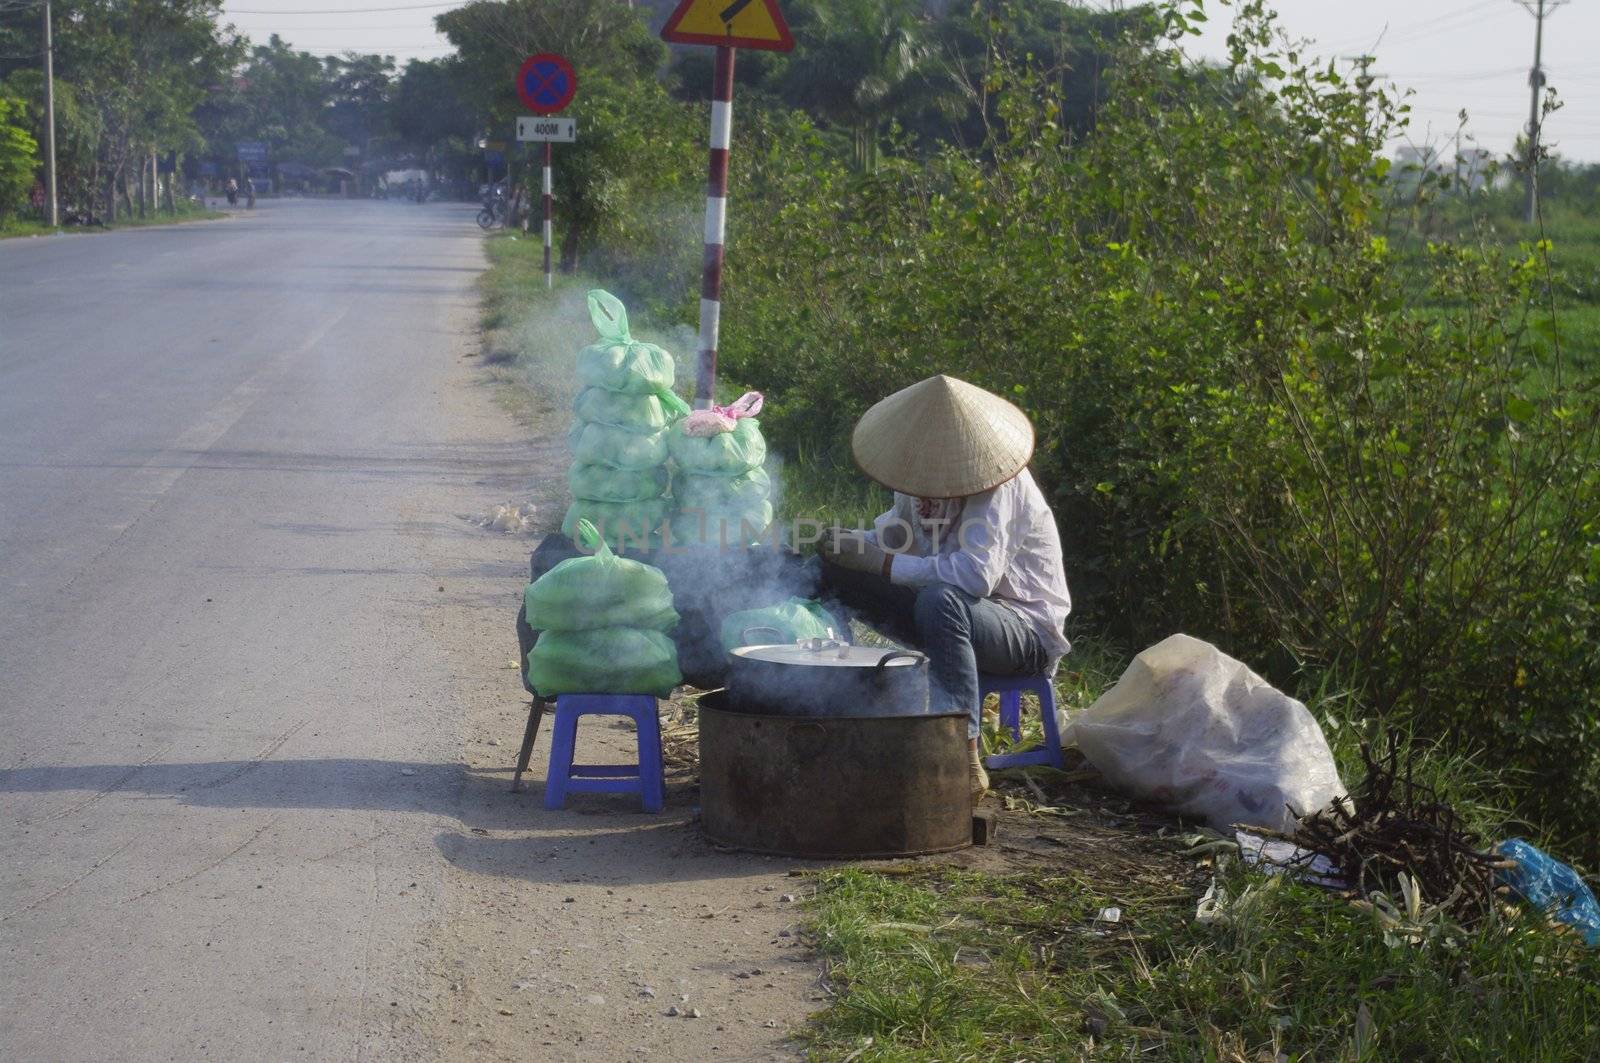 On roadsides in september to November, many vendors offer corn on the cob steamed.